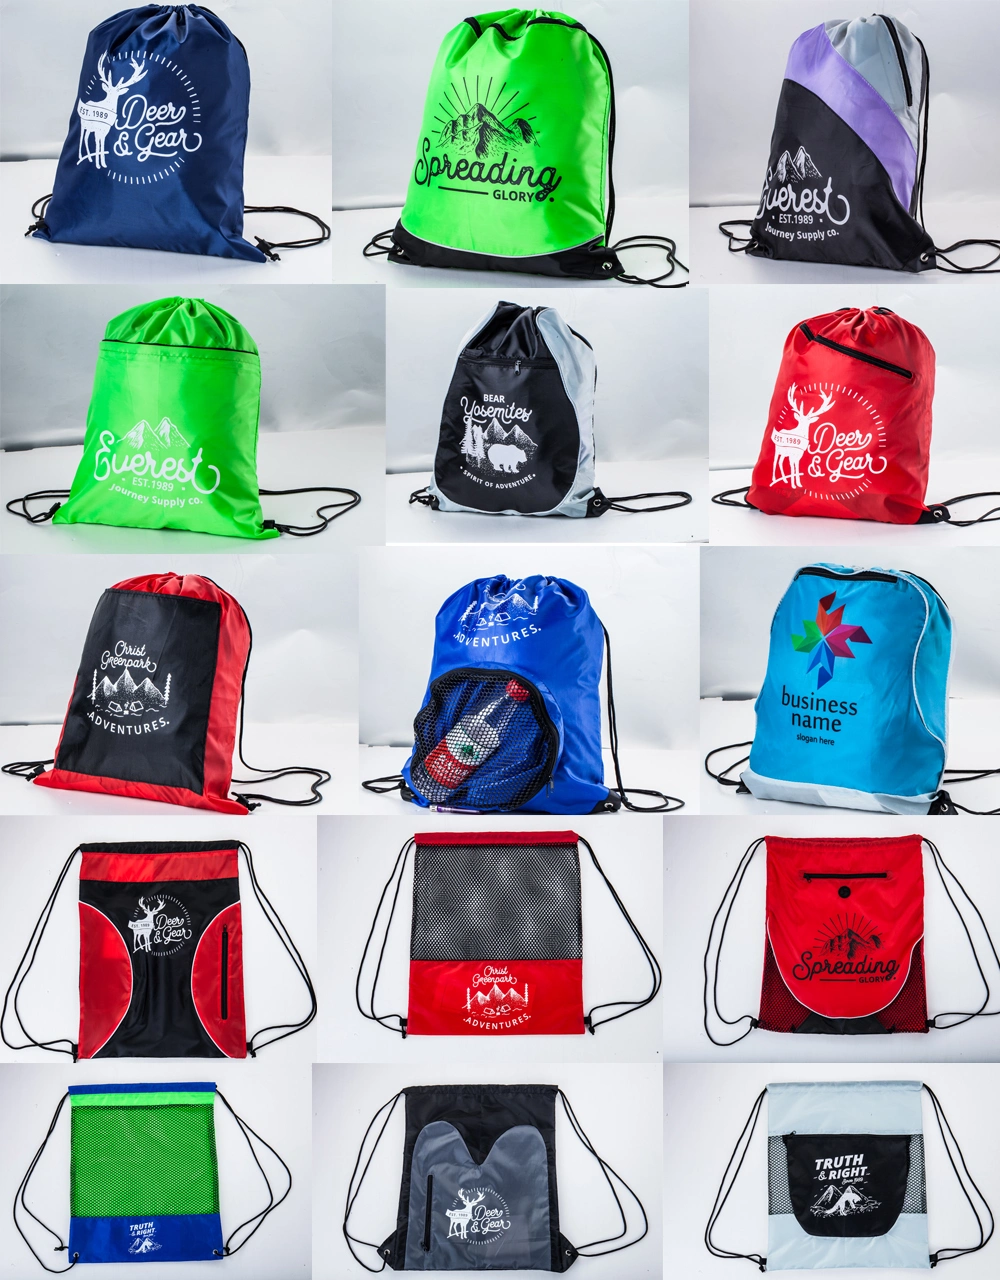 Bicycle Bags, Gym Bag, Drawstring Bag, Polyester Bag, Gift Bag, Drawstring Backpack, Laundry Bags, Promotional Bag, Handbag Dust Bag, Gym Sack